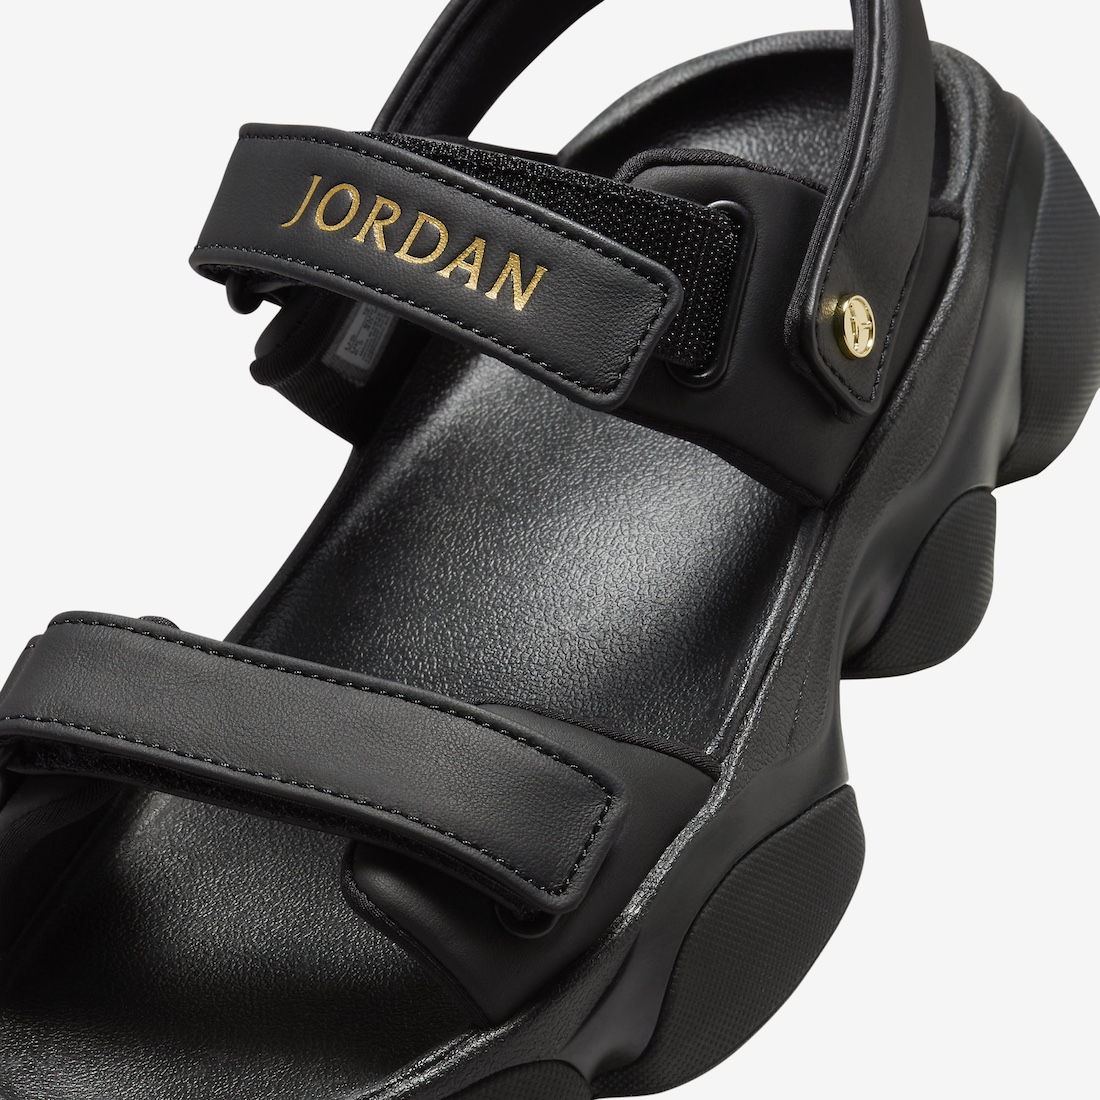 Jordan-Deja-Sandal-Black-Metallic-Gold-FN5036-001-6.jpg